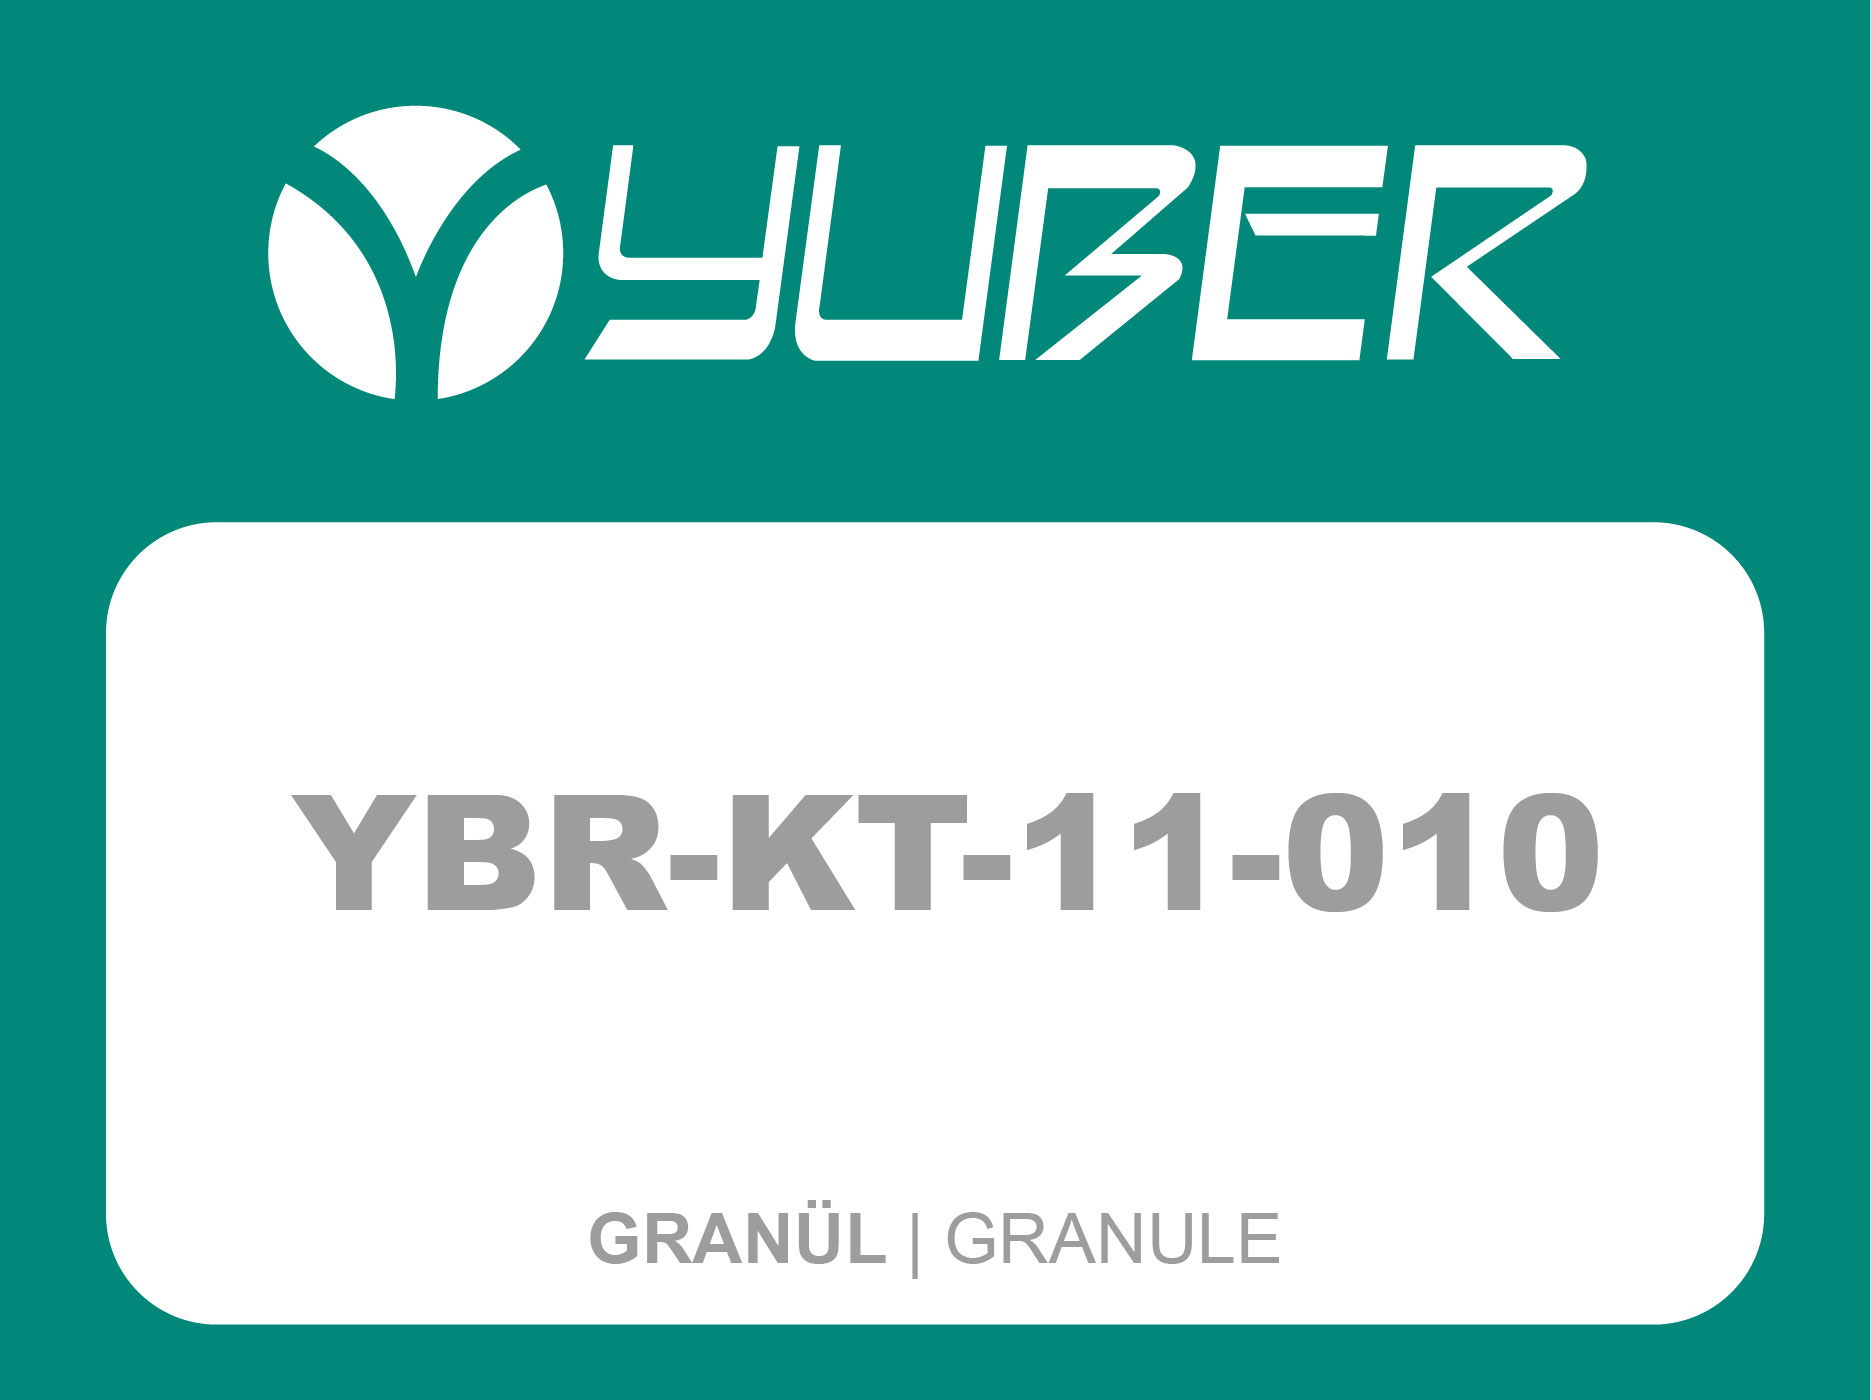 YBR KT 11 010 Granule Yuber Metallurgy